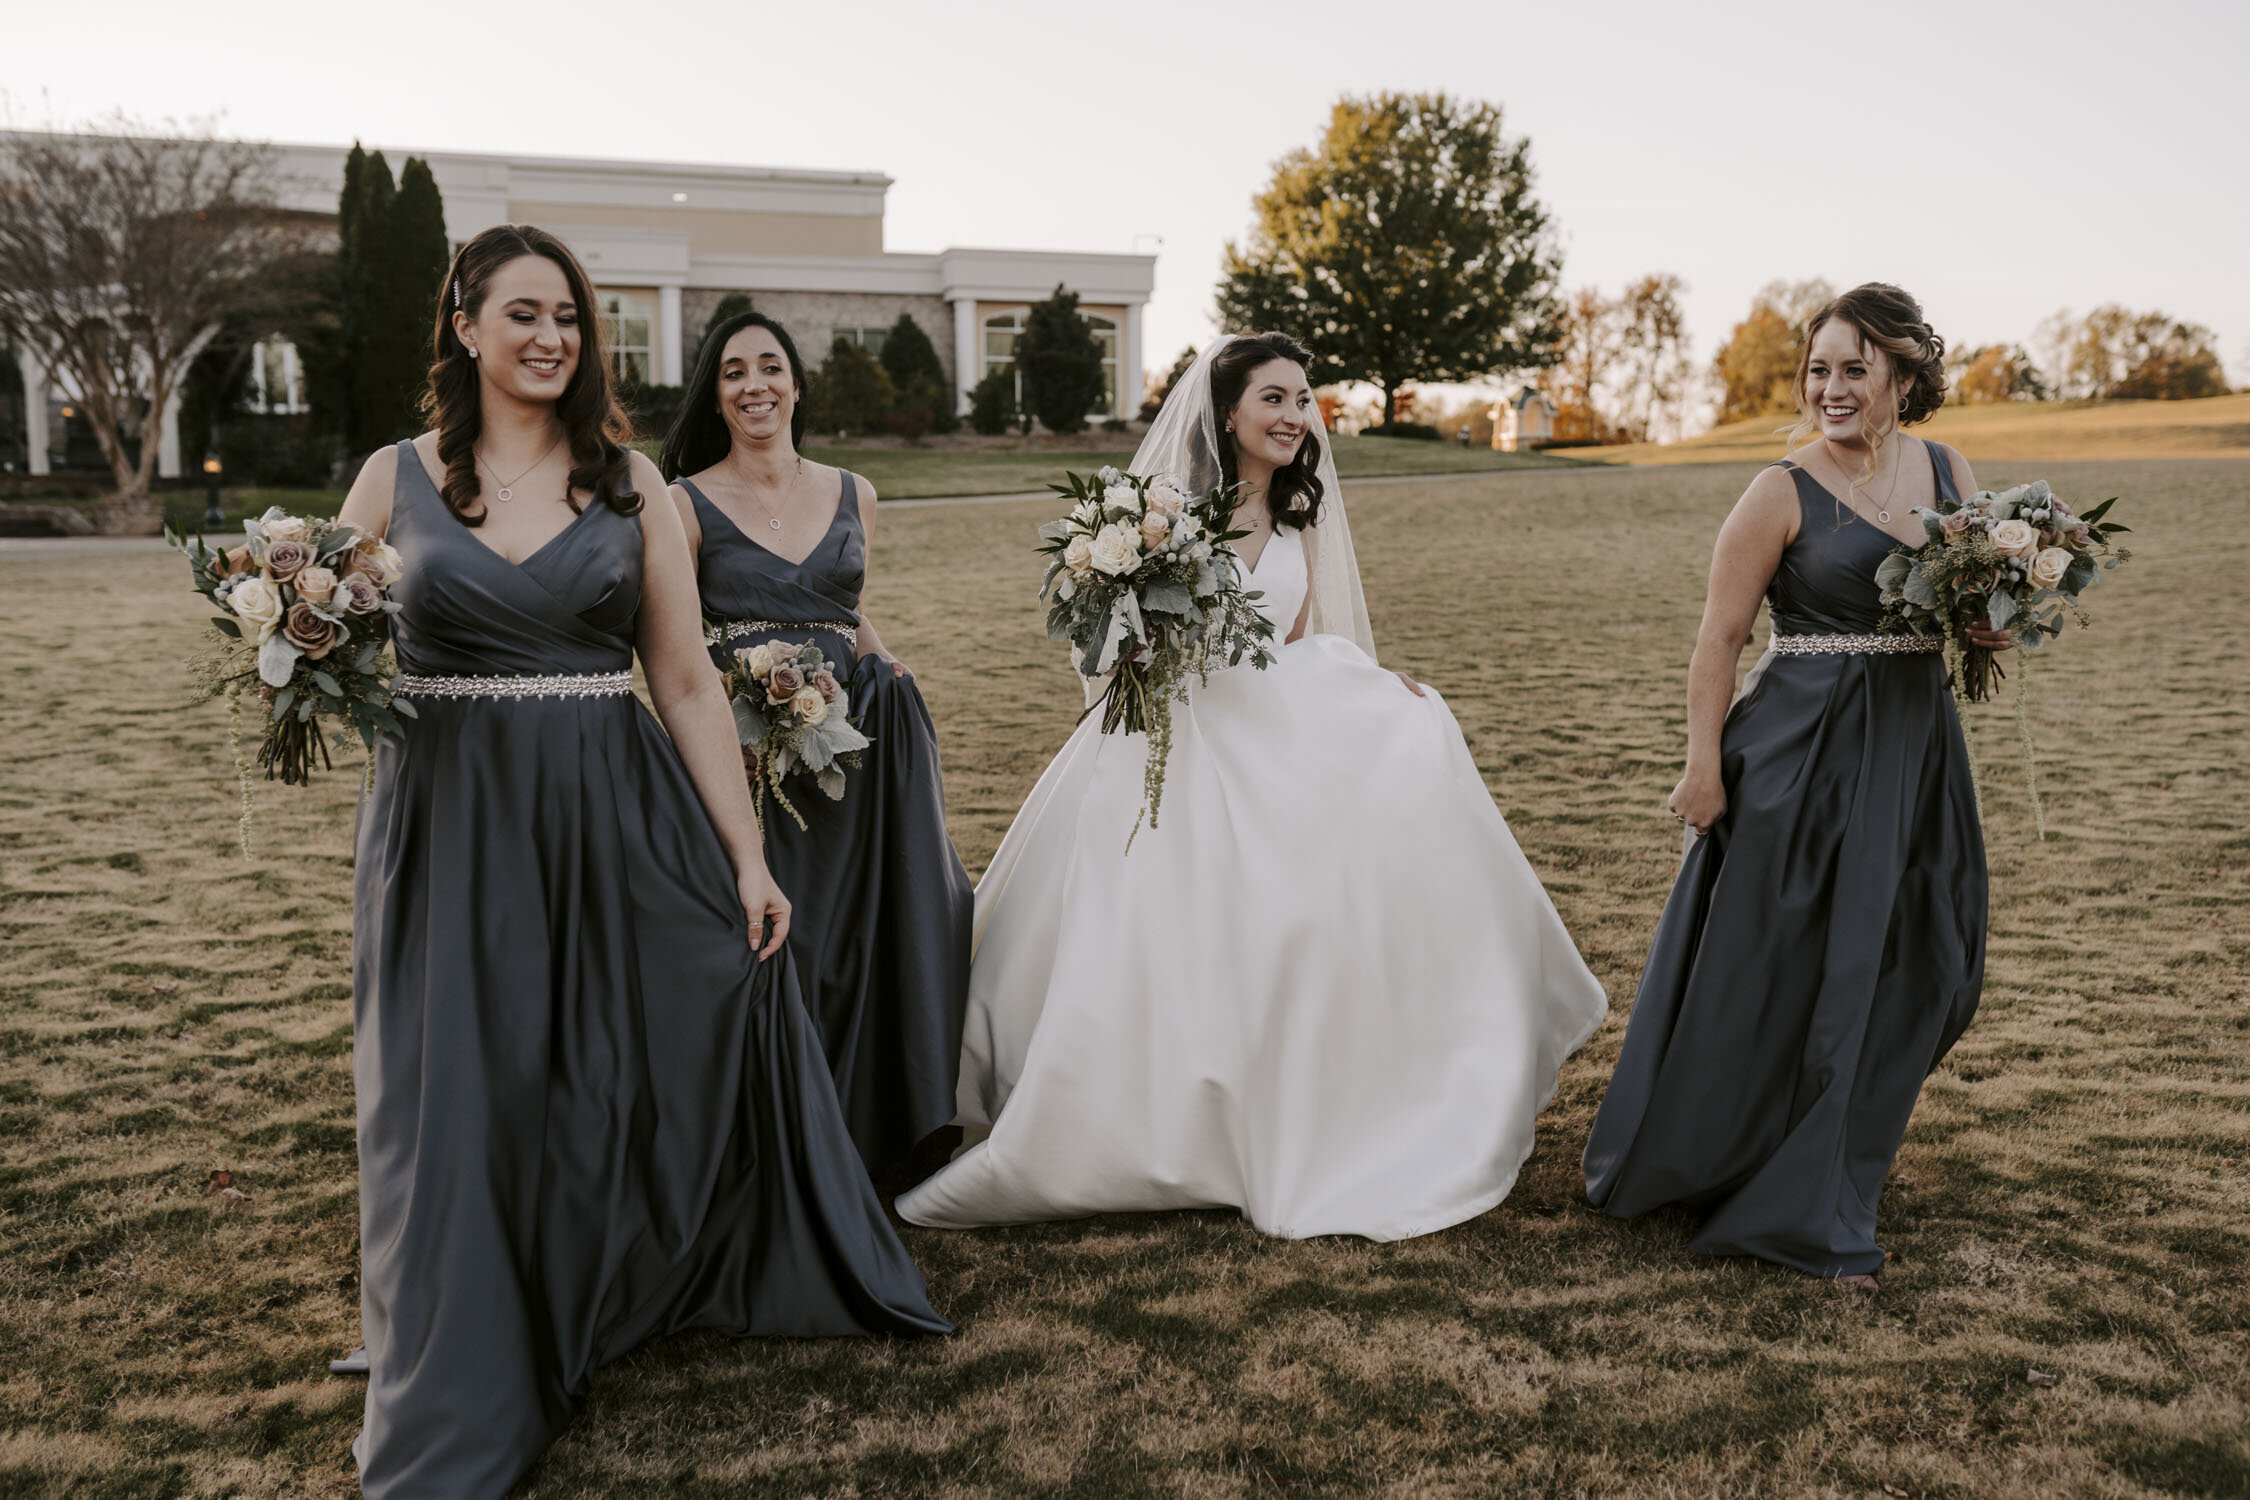 Classy and Elegant Wedding Party Portraits at Grandover Resort Wedding by Kayli LaFon Photography | Greensboro Winston-Salem, NC Wedding Photographer